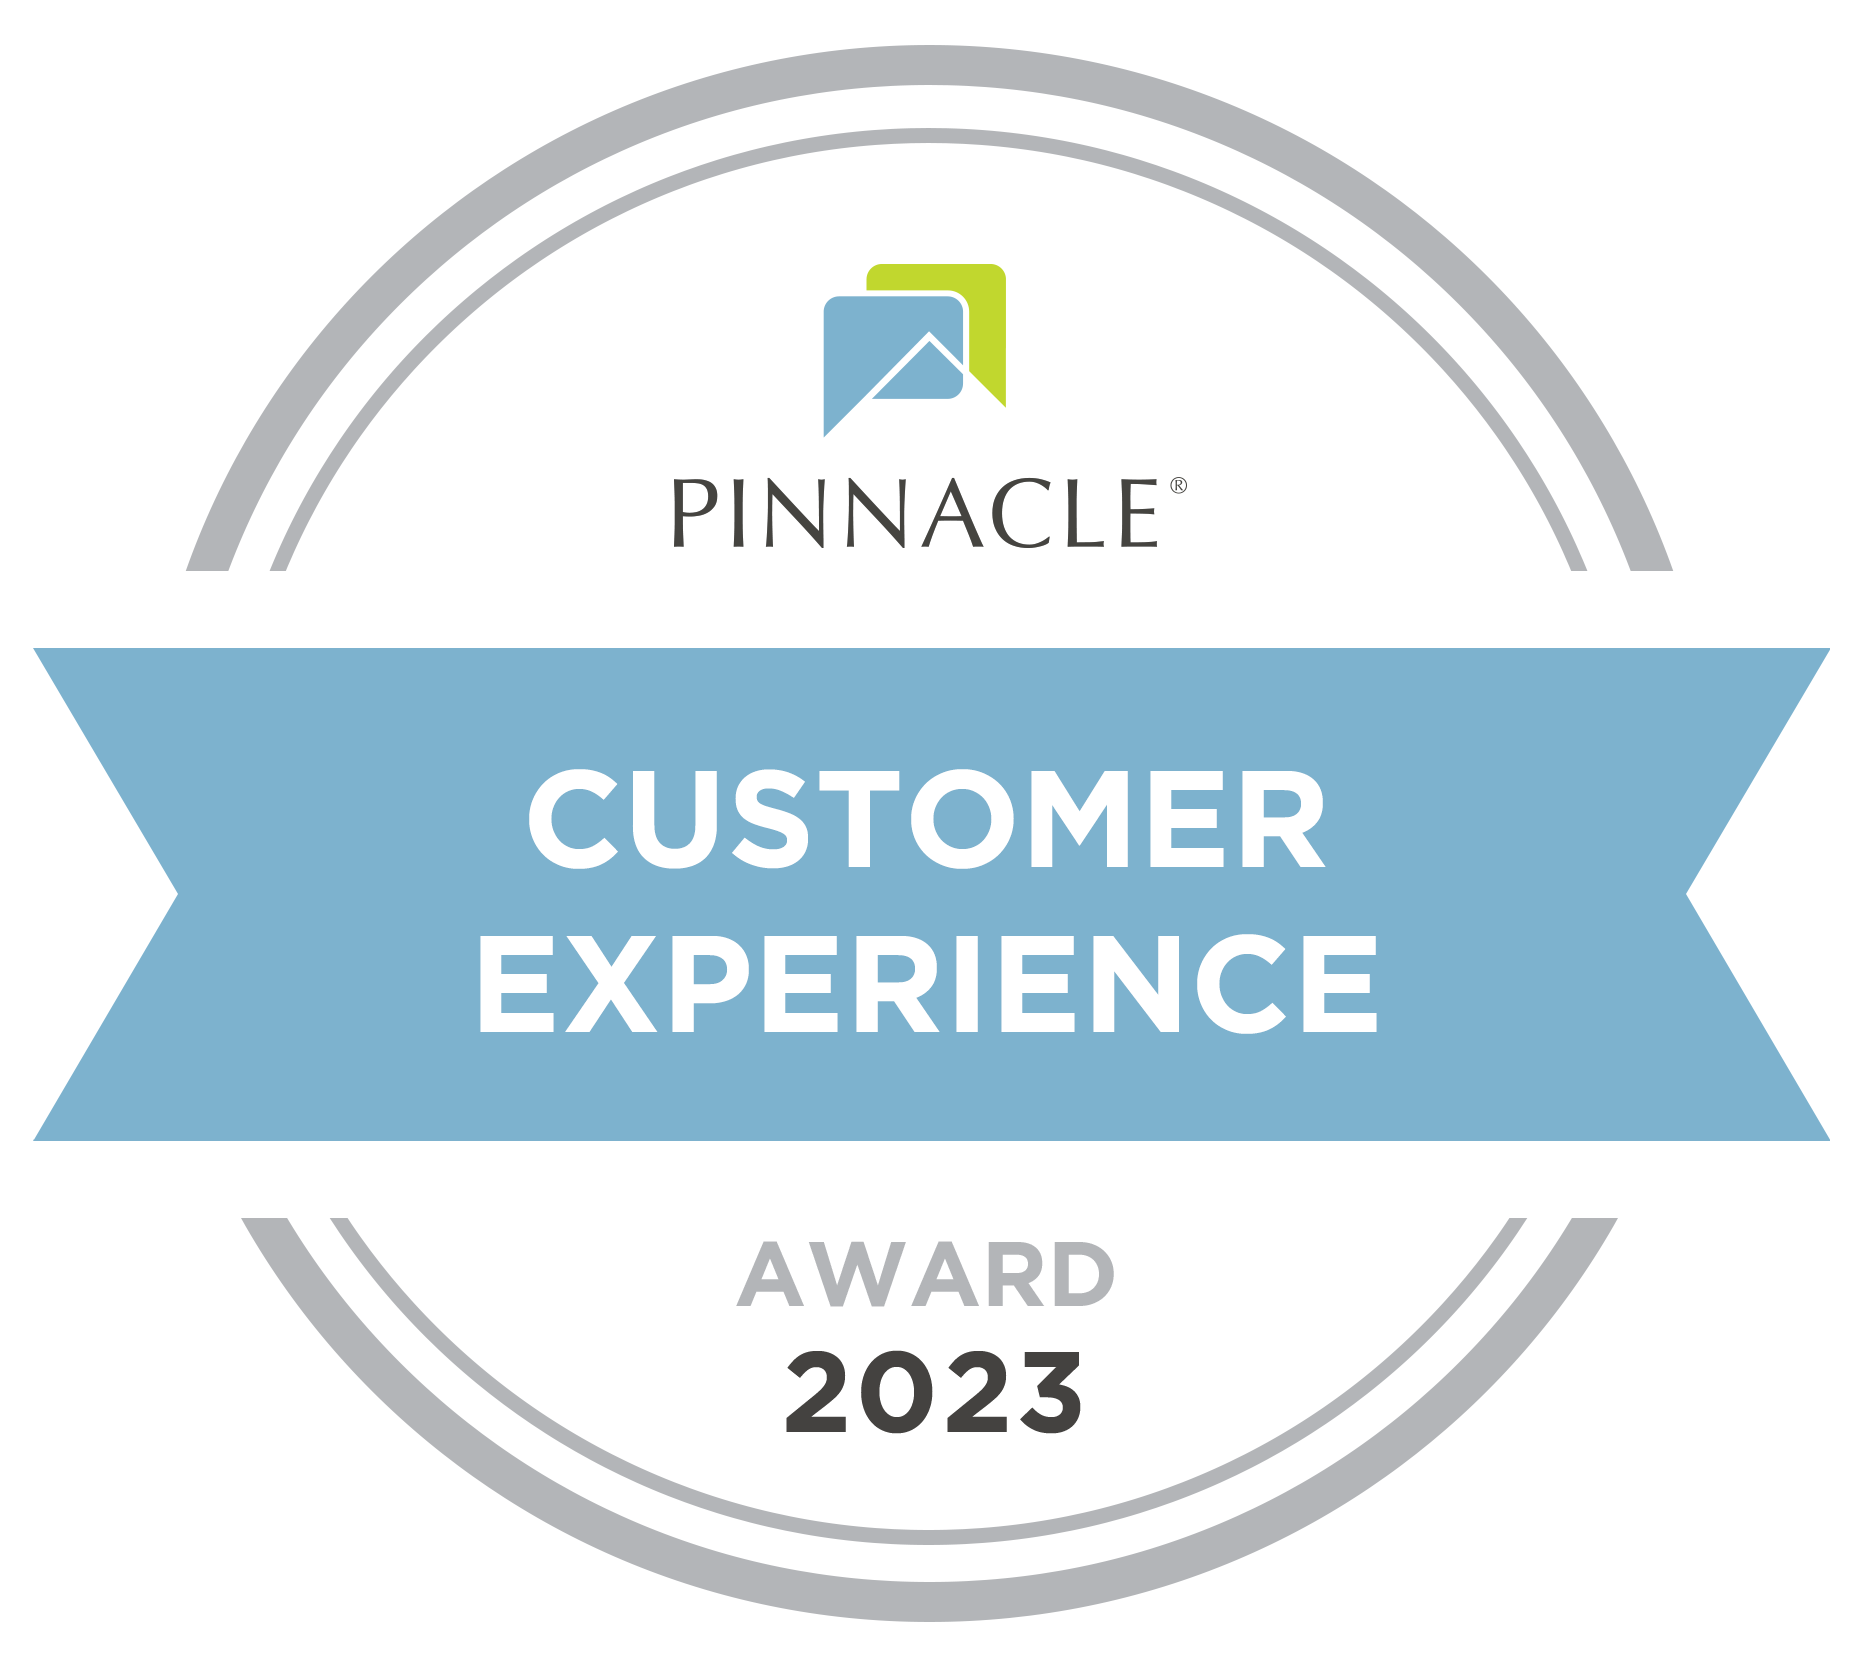 Pinnacle Award Customer Experience 2023